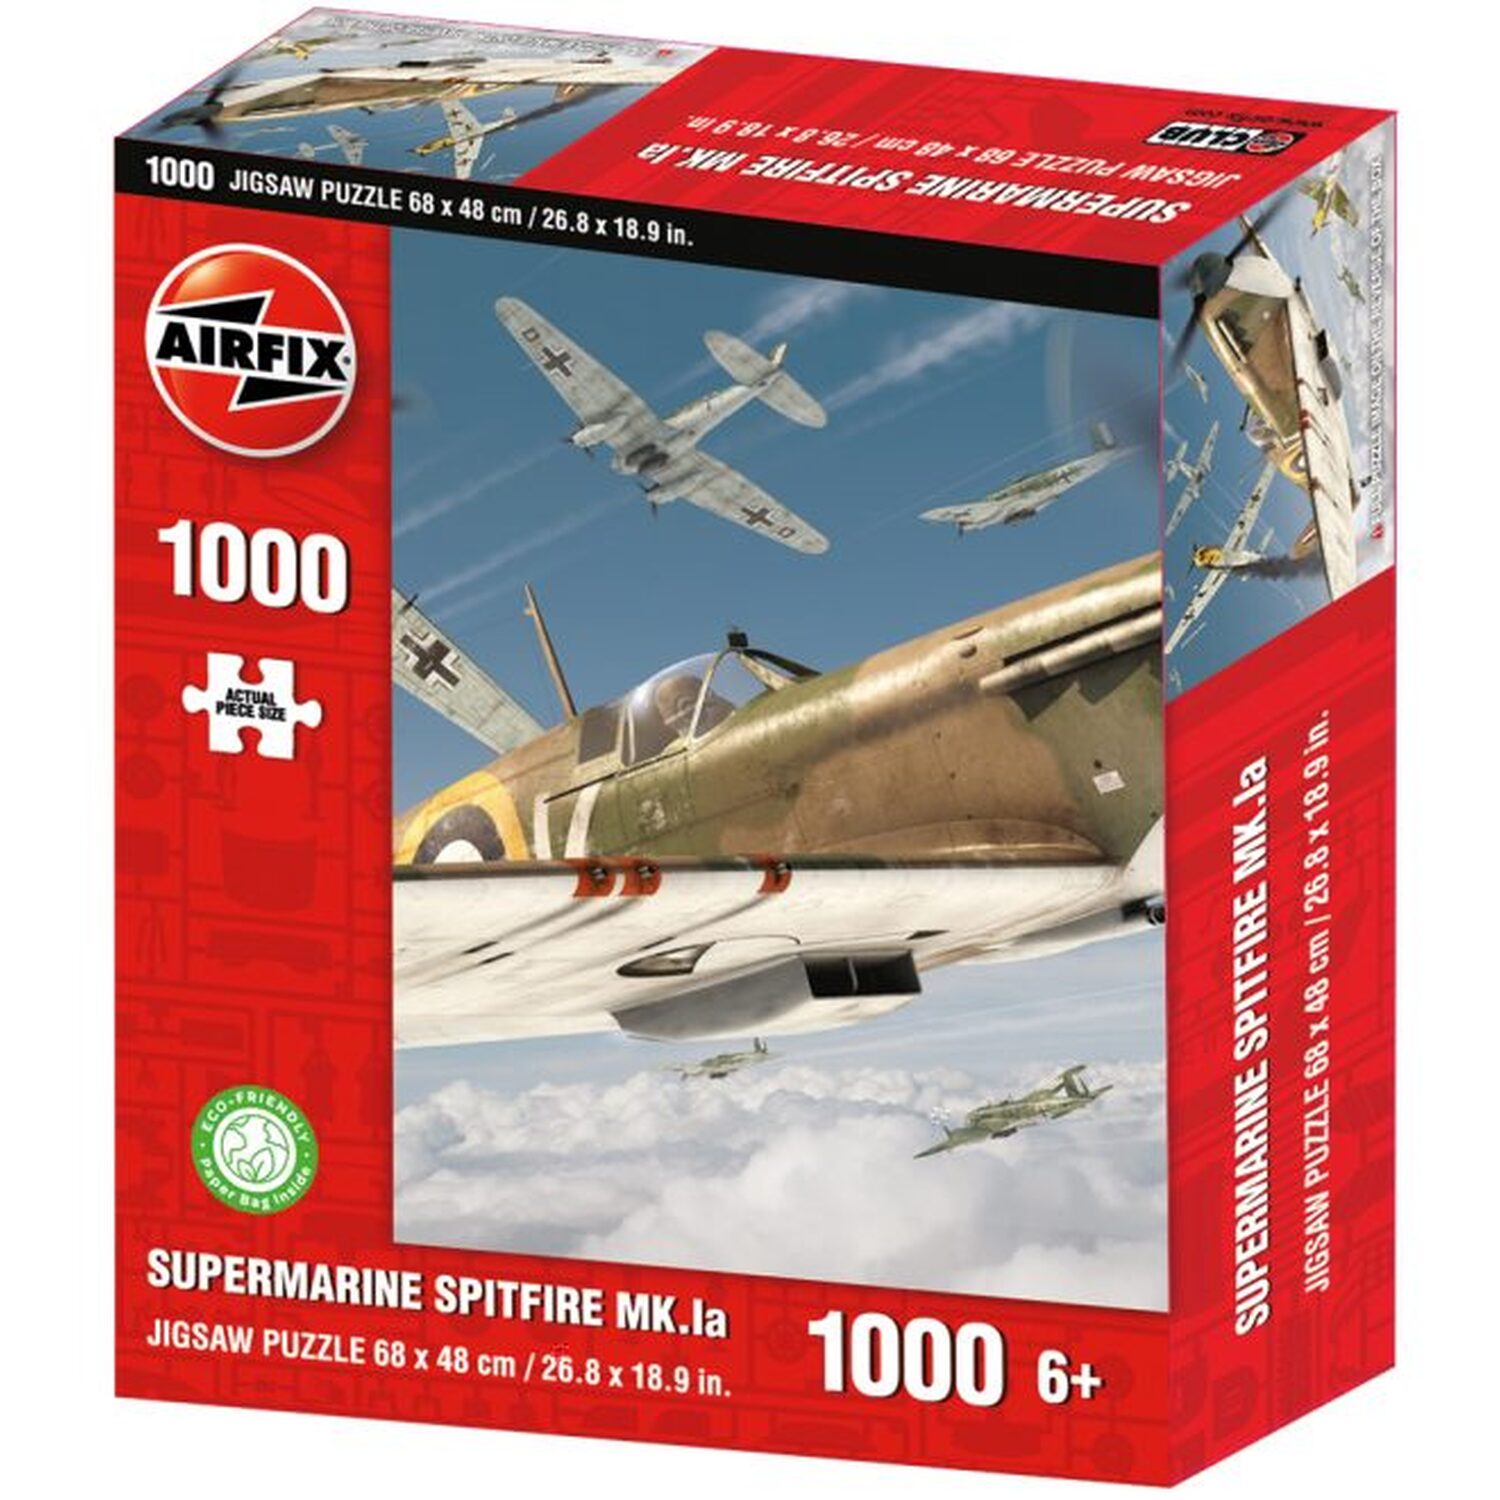 1000-Piece Airfix Supermarine Spitfire Puzzle - Red Image 1